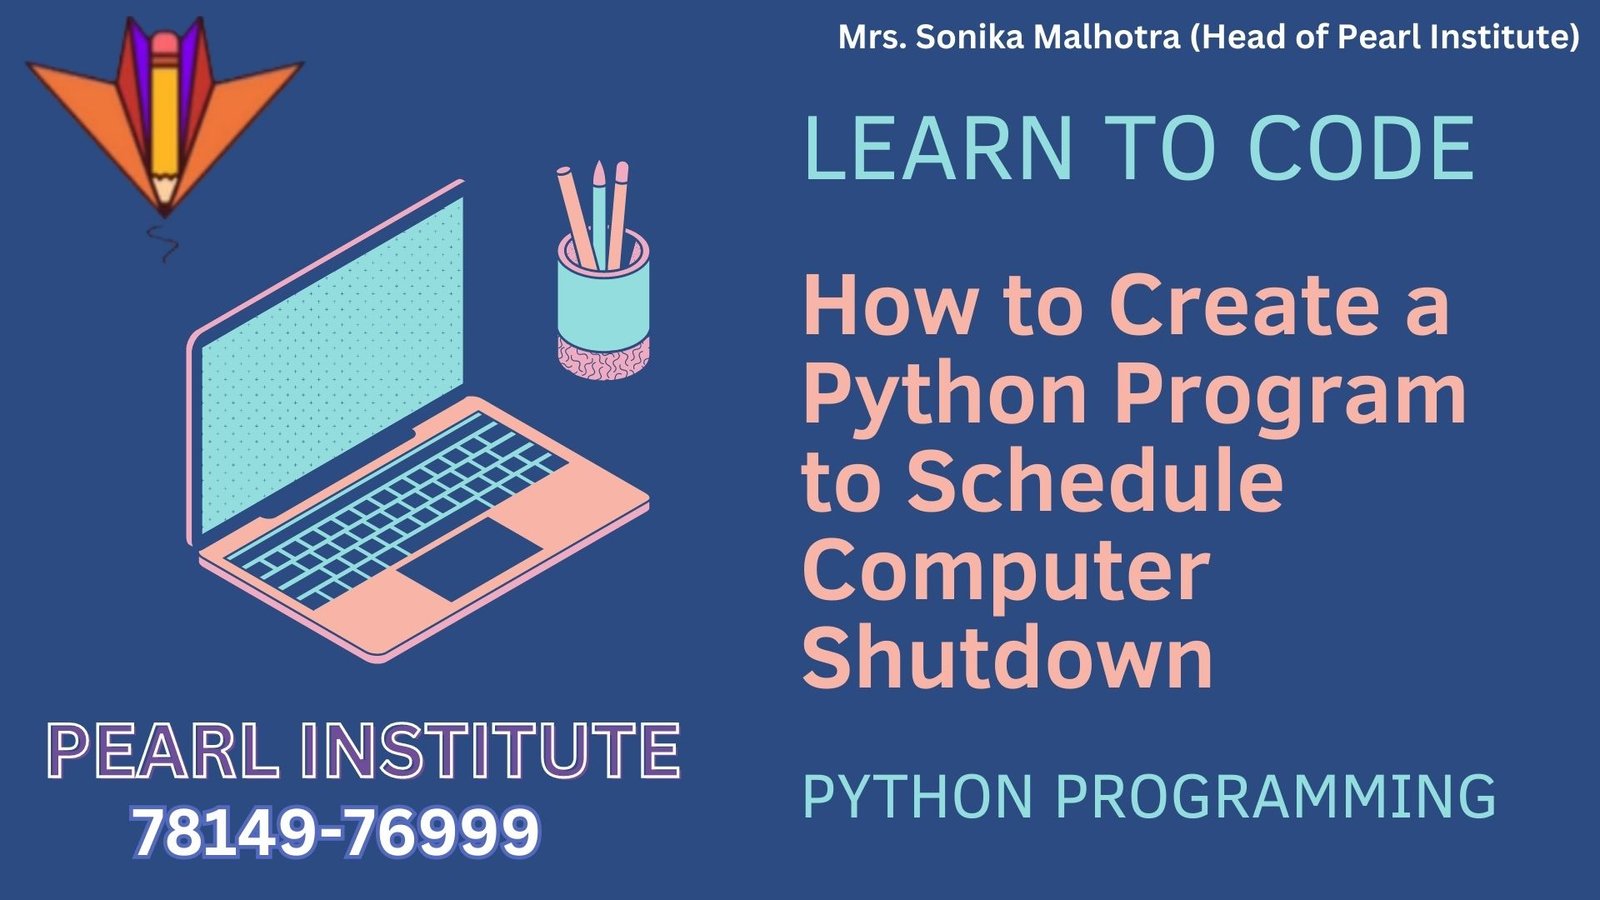 How to Create a Python Program to Schedule Computer Shutdown